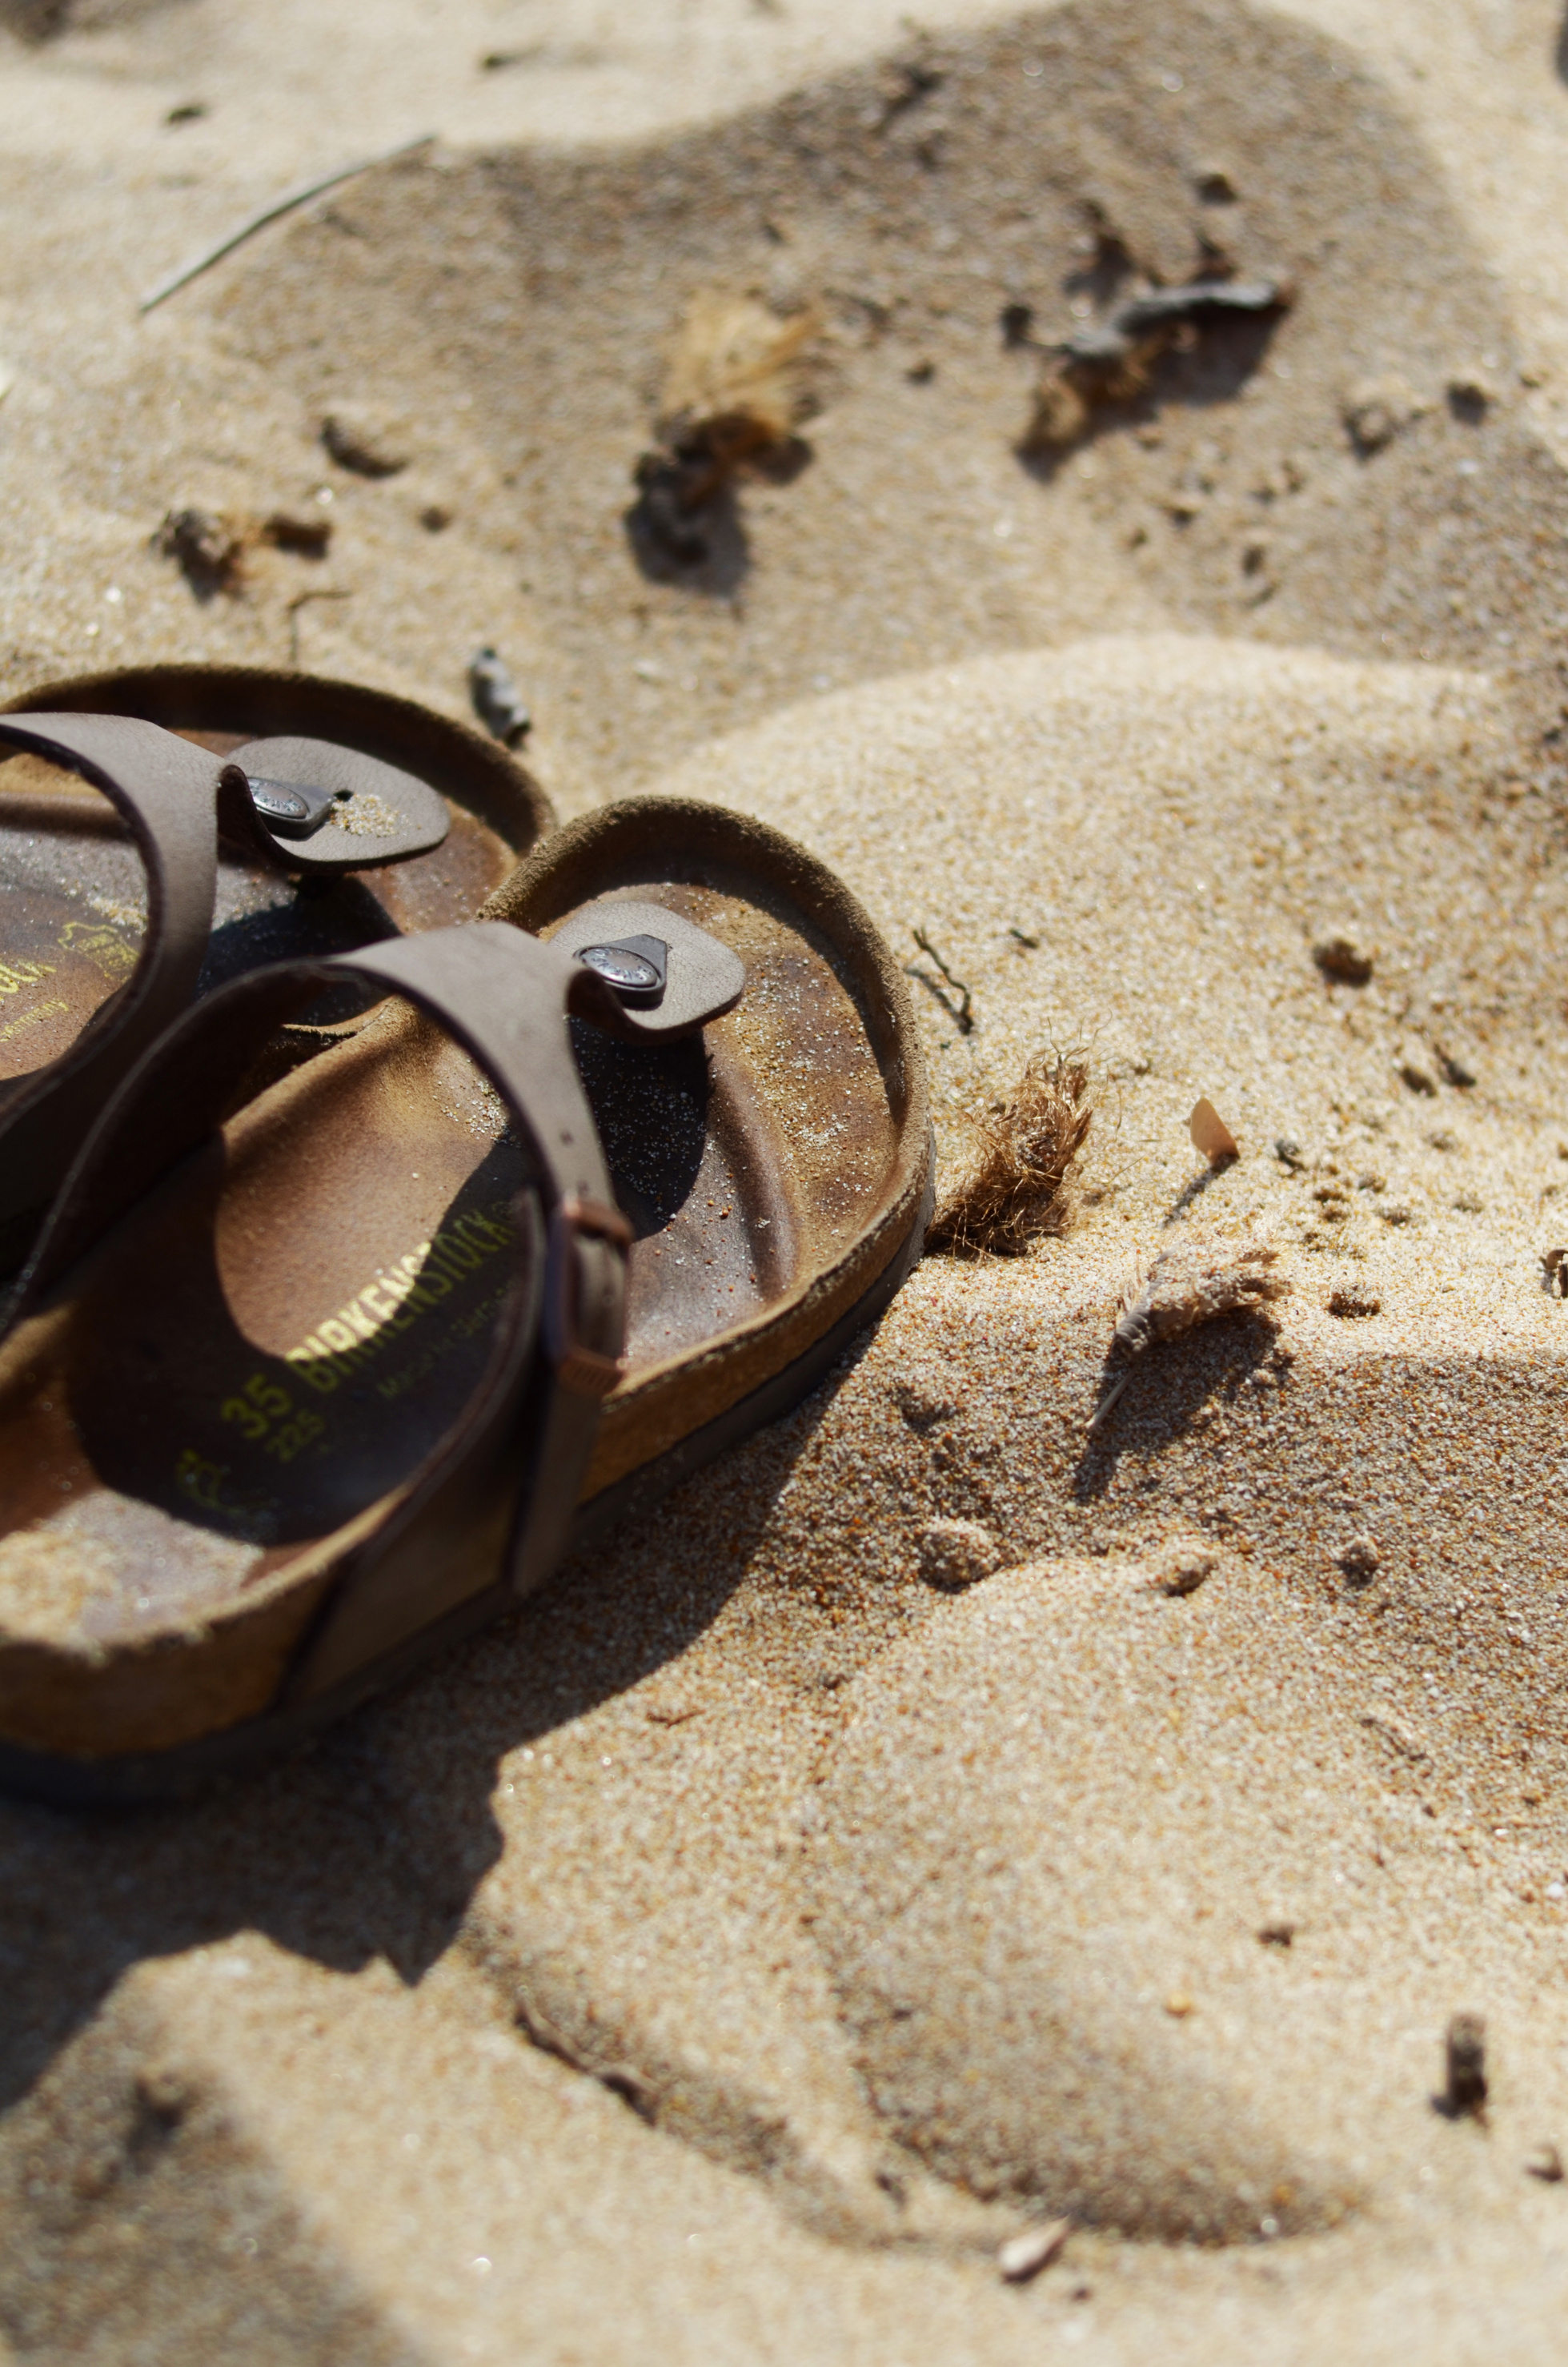 Birkenstock Sandals on Brown Sand